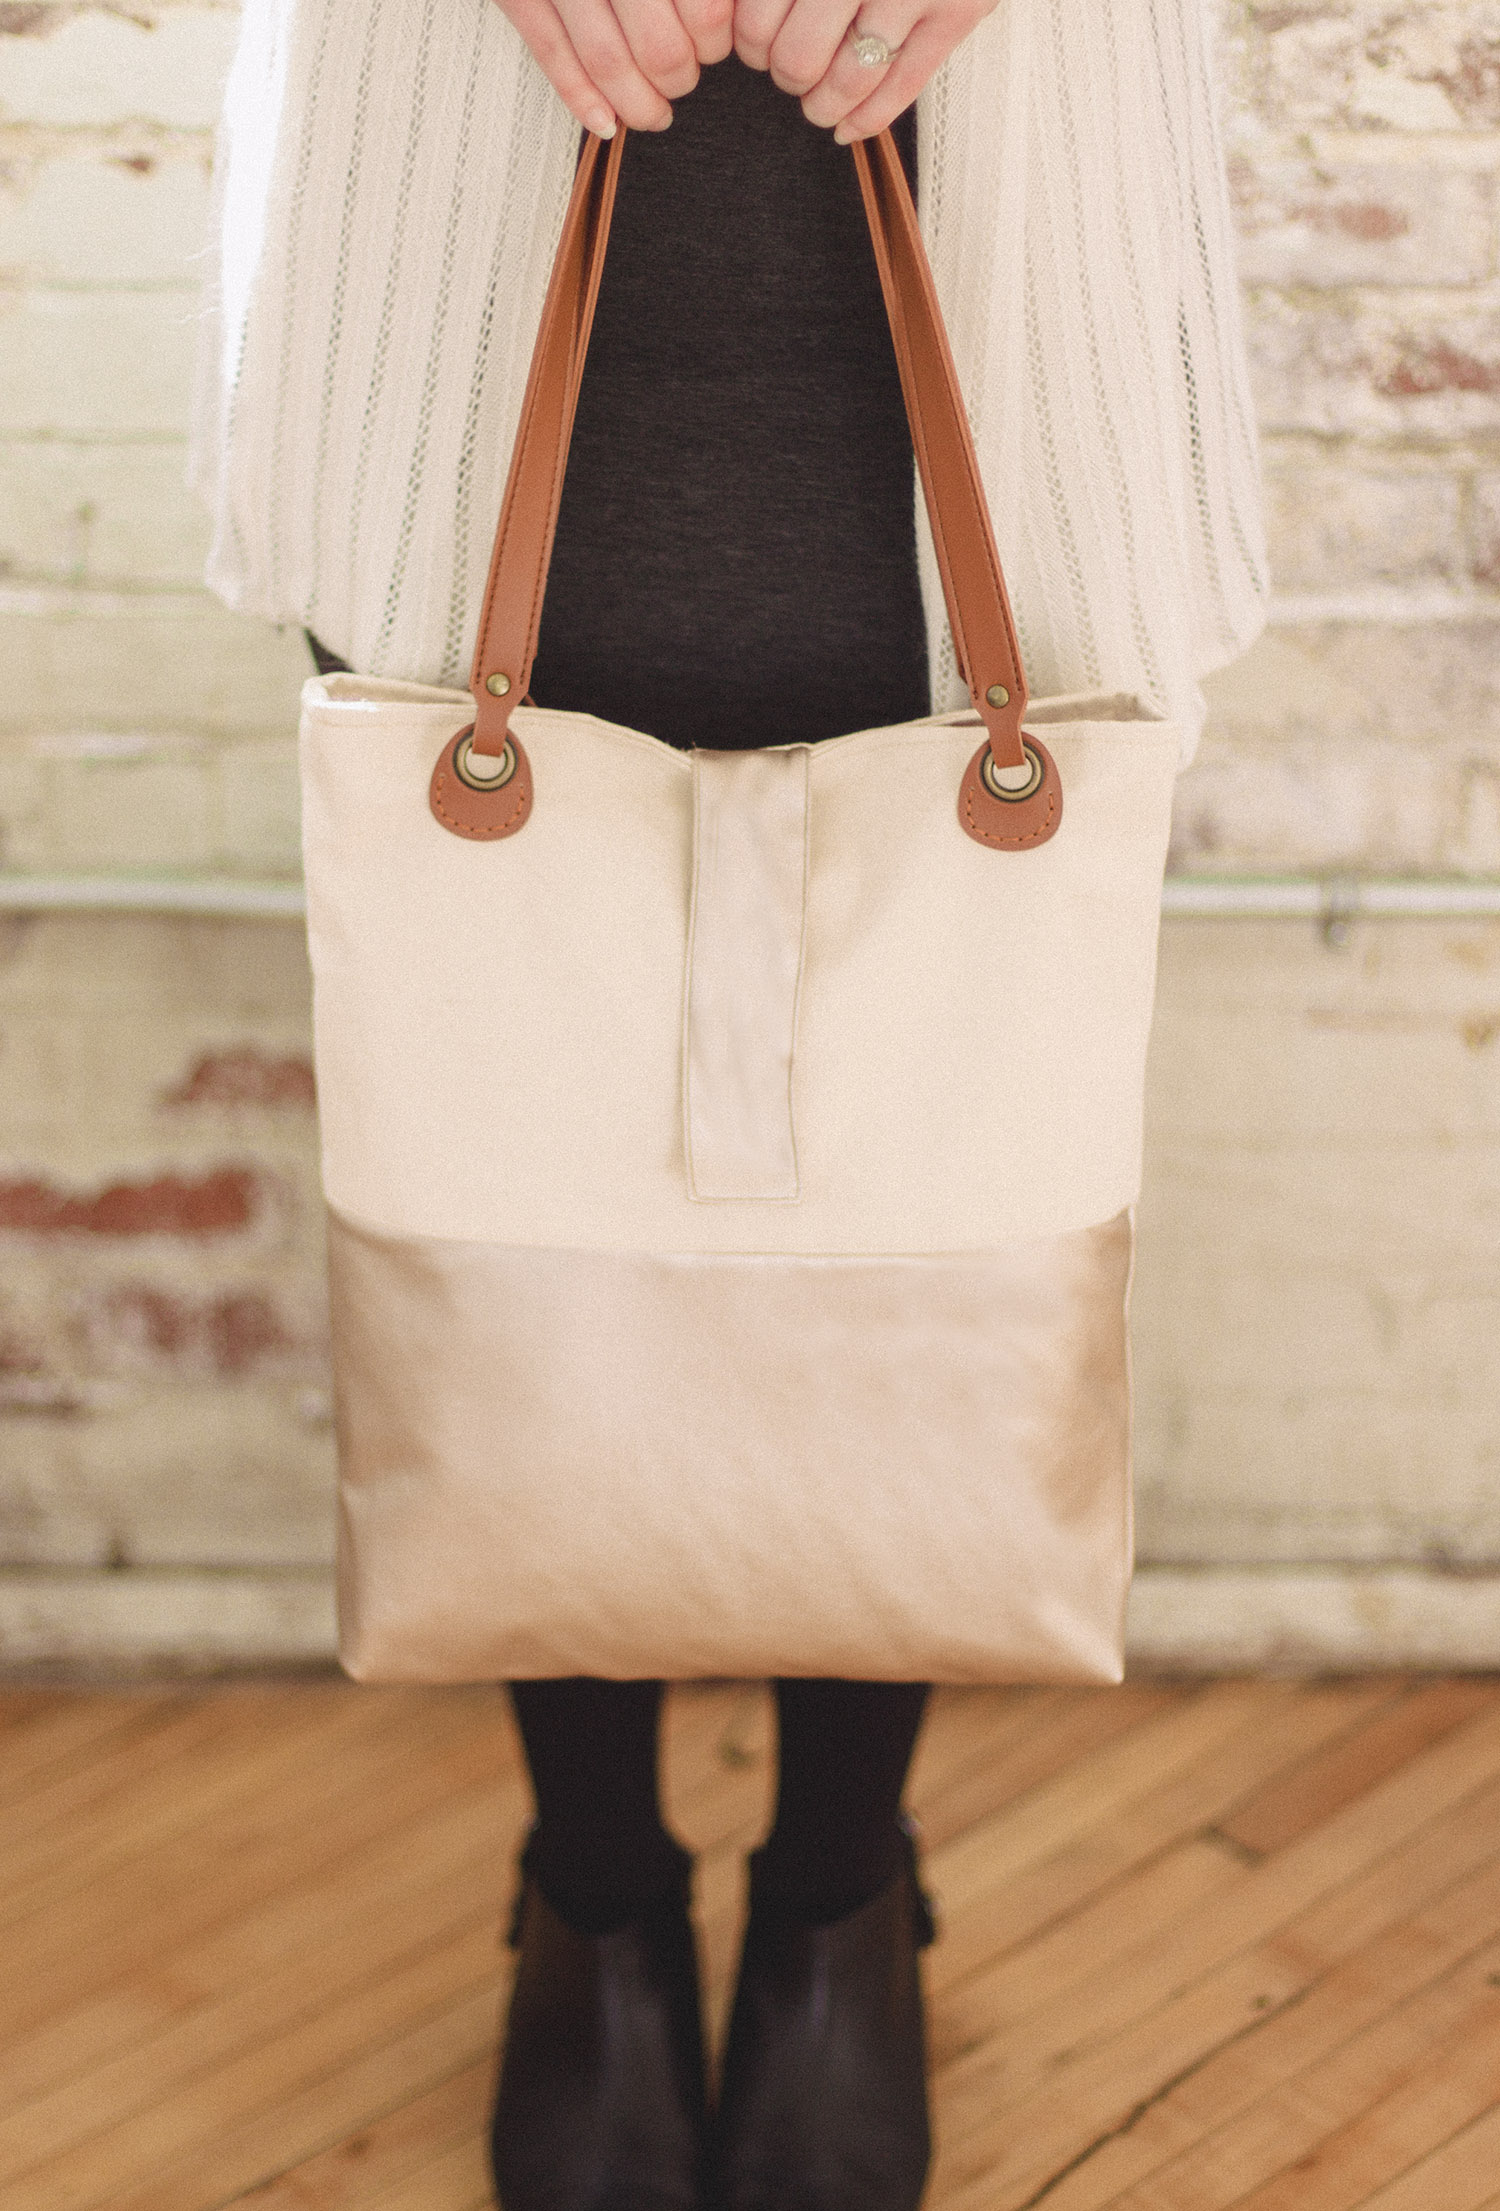 Handmade Fabric Tote Bag Purse Fiber Art To Wear Birds Pattern Convertible  Strap | eBay